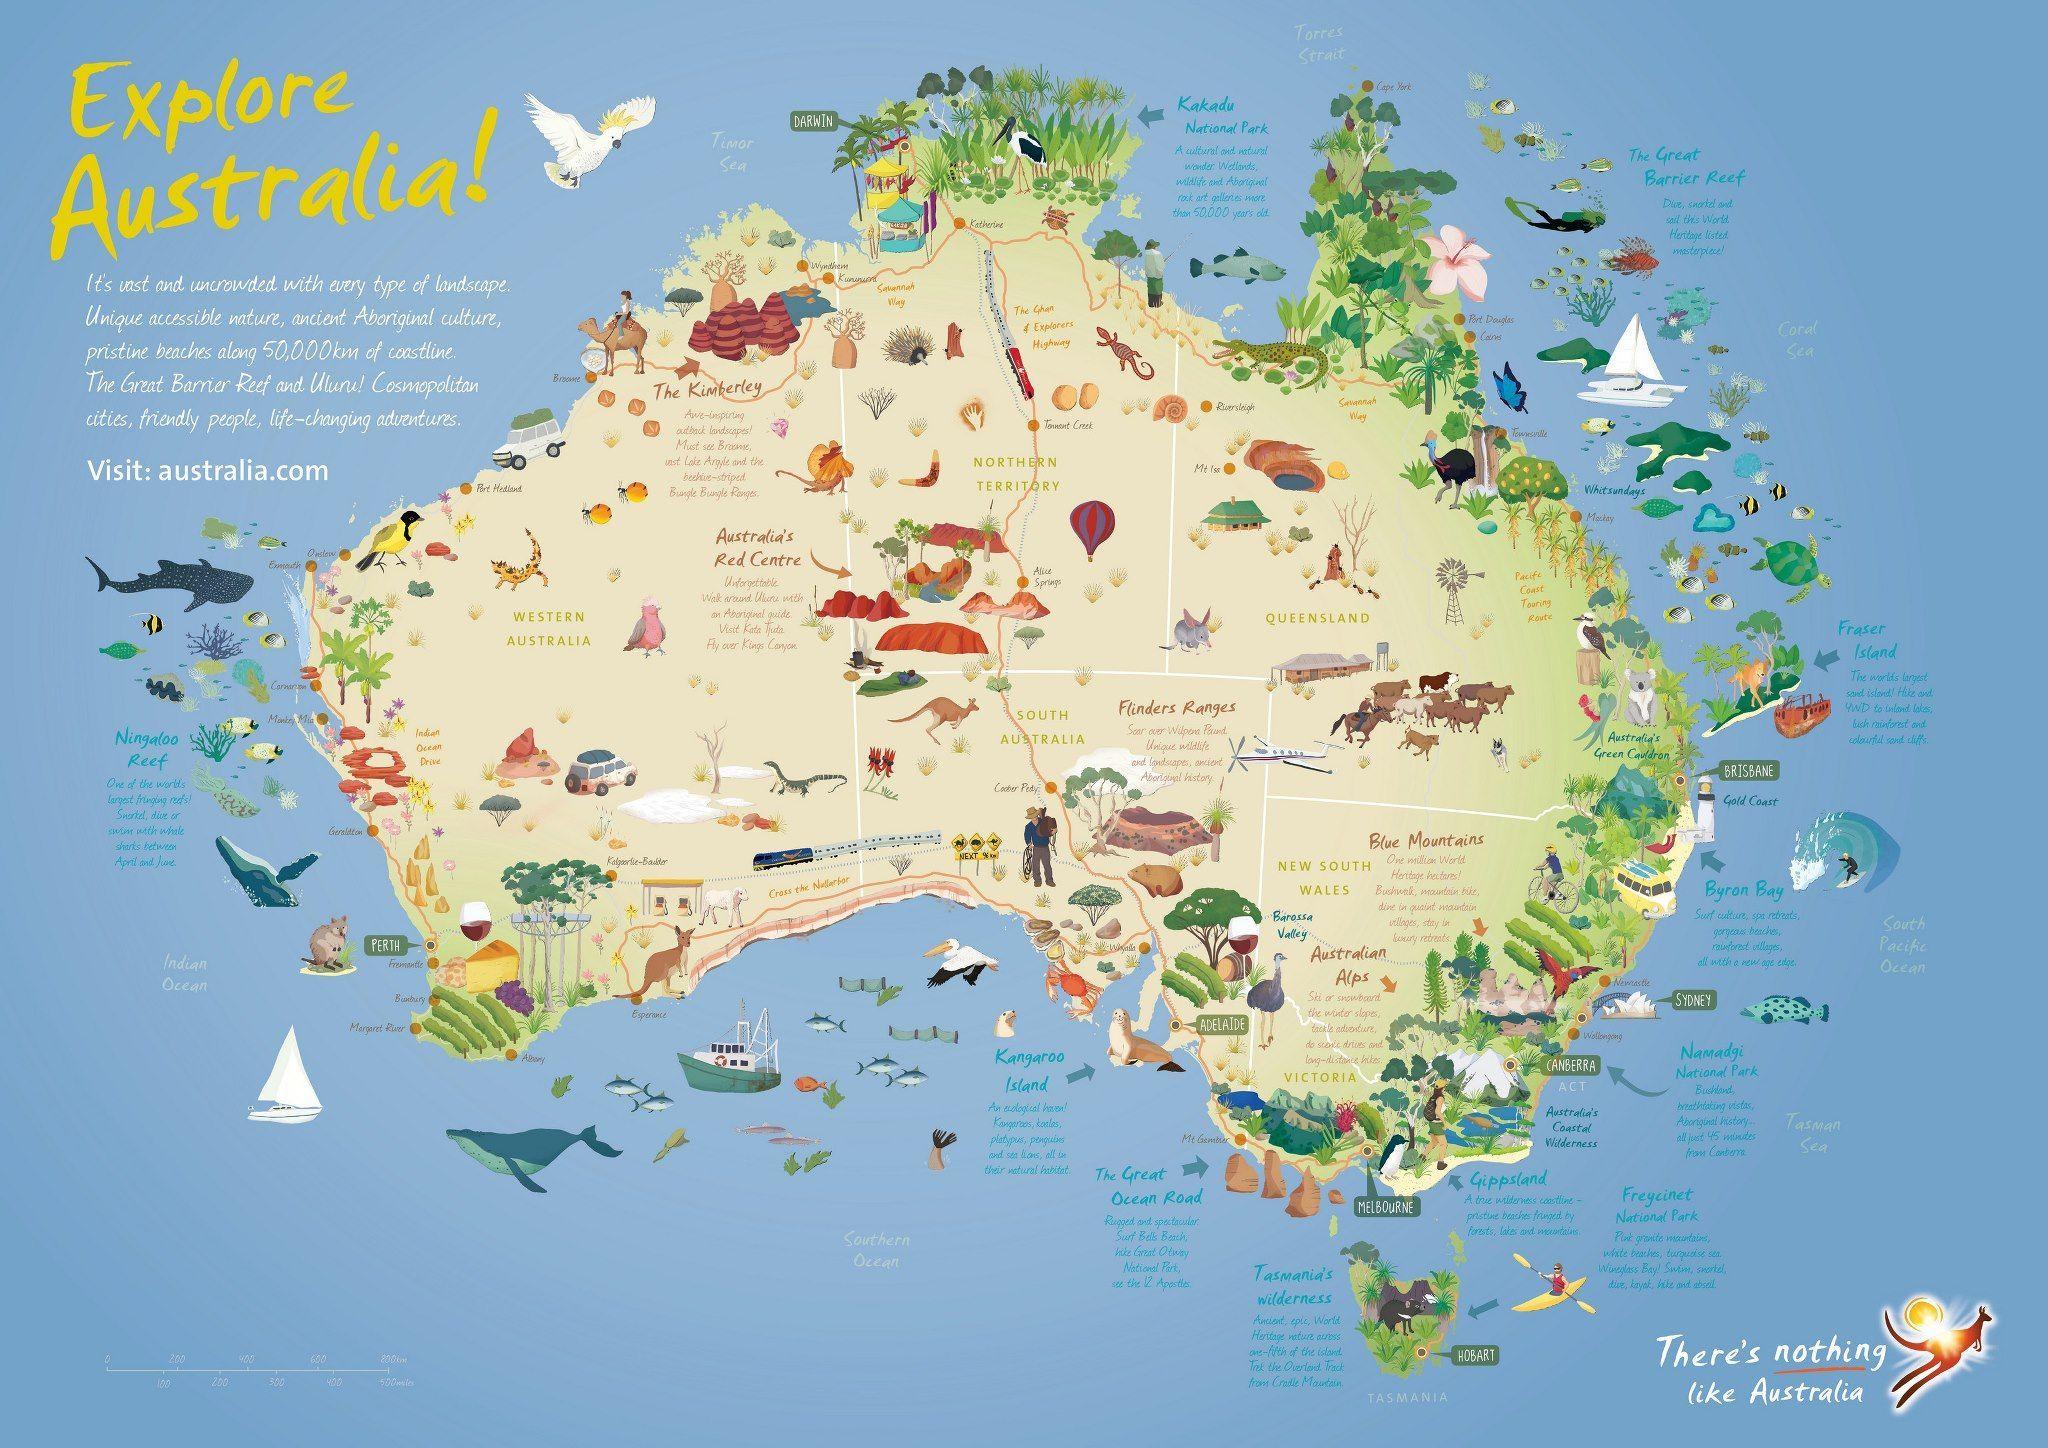 australia tourism facts